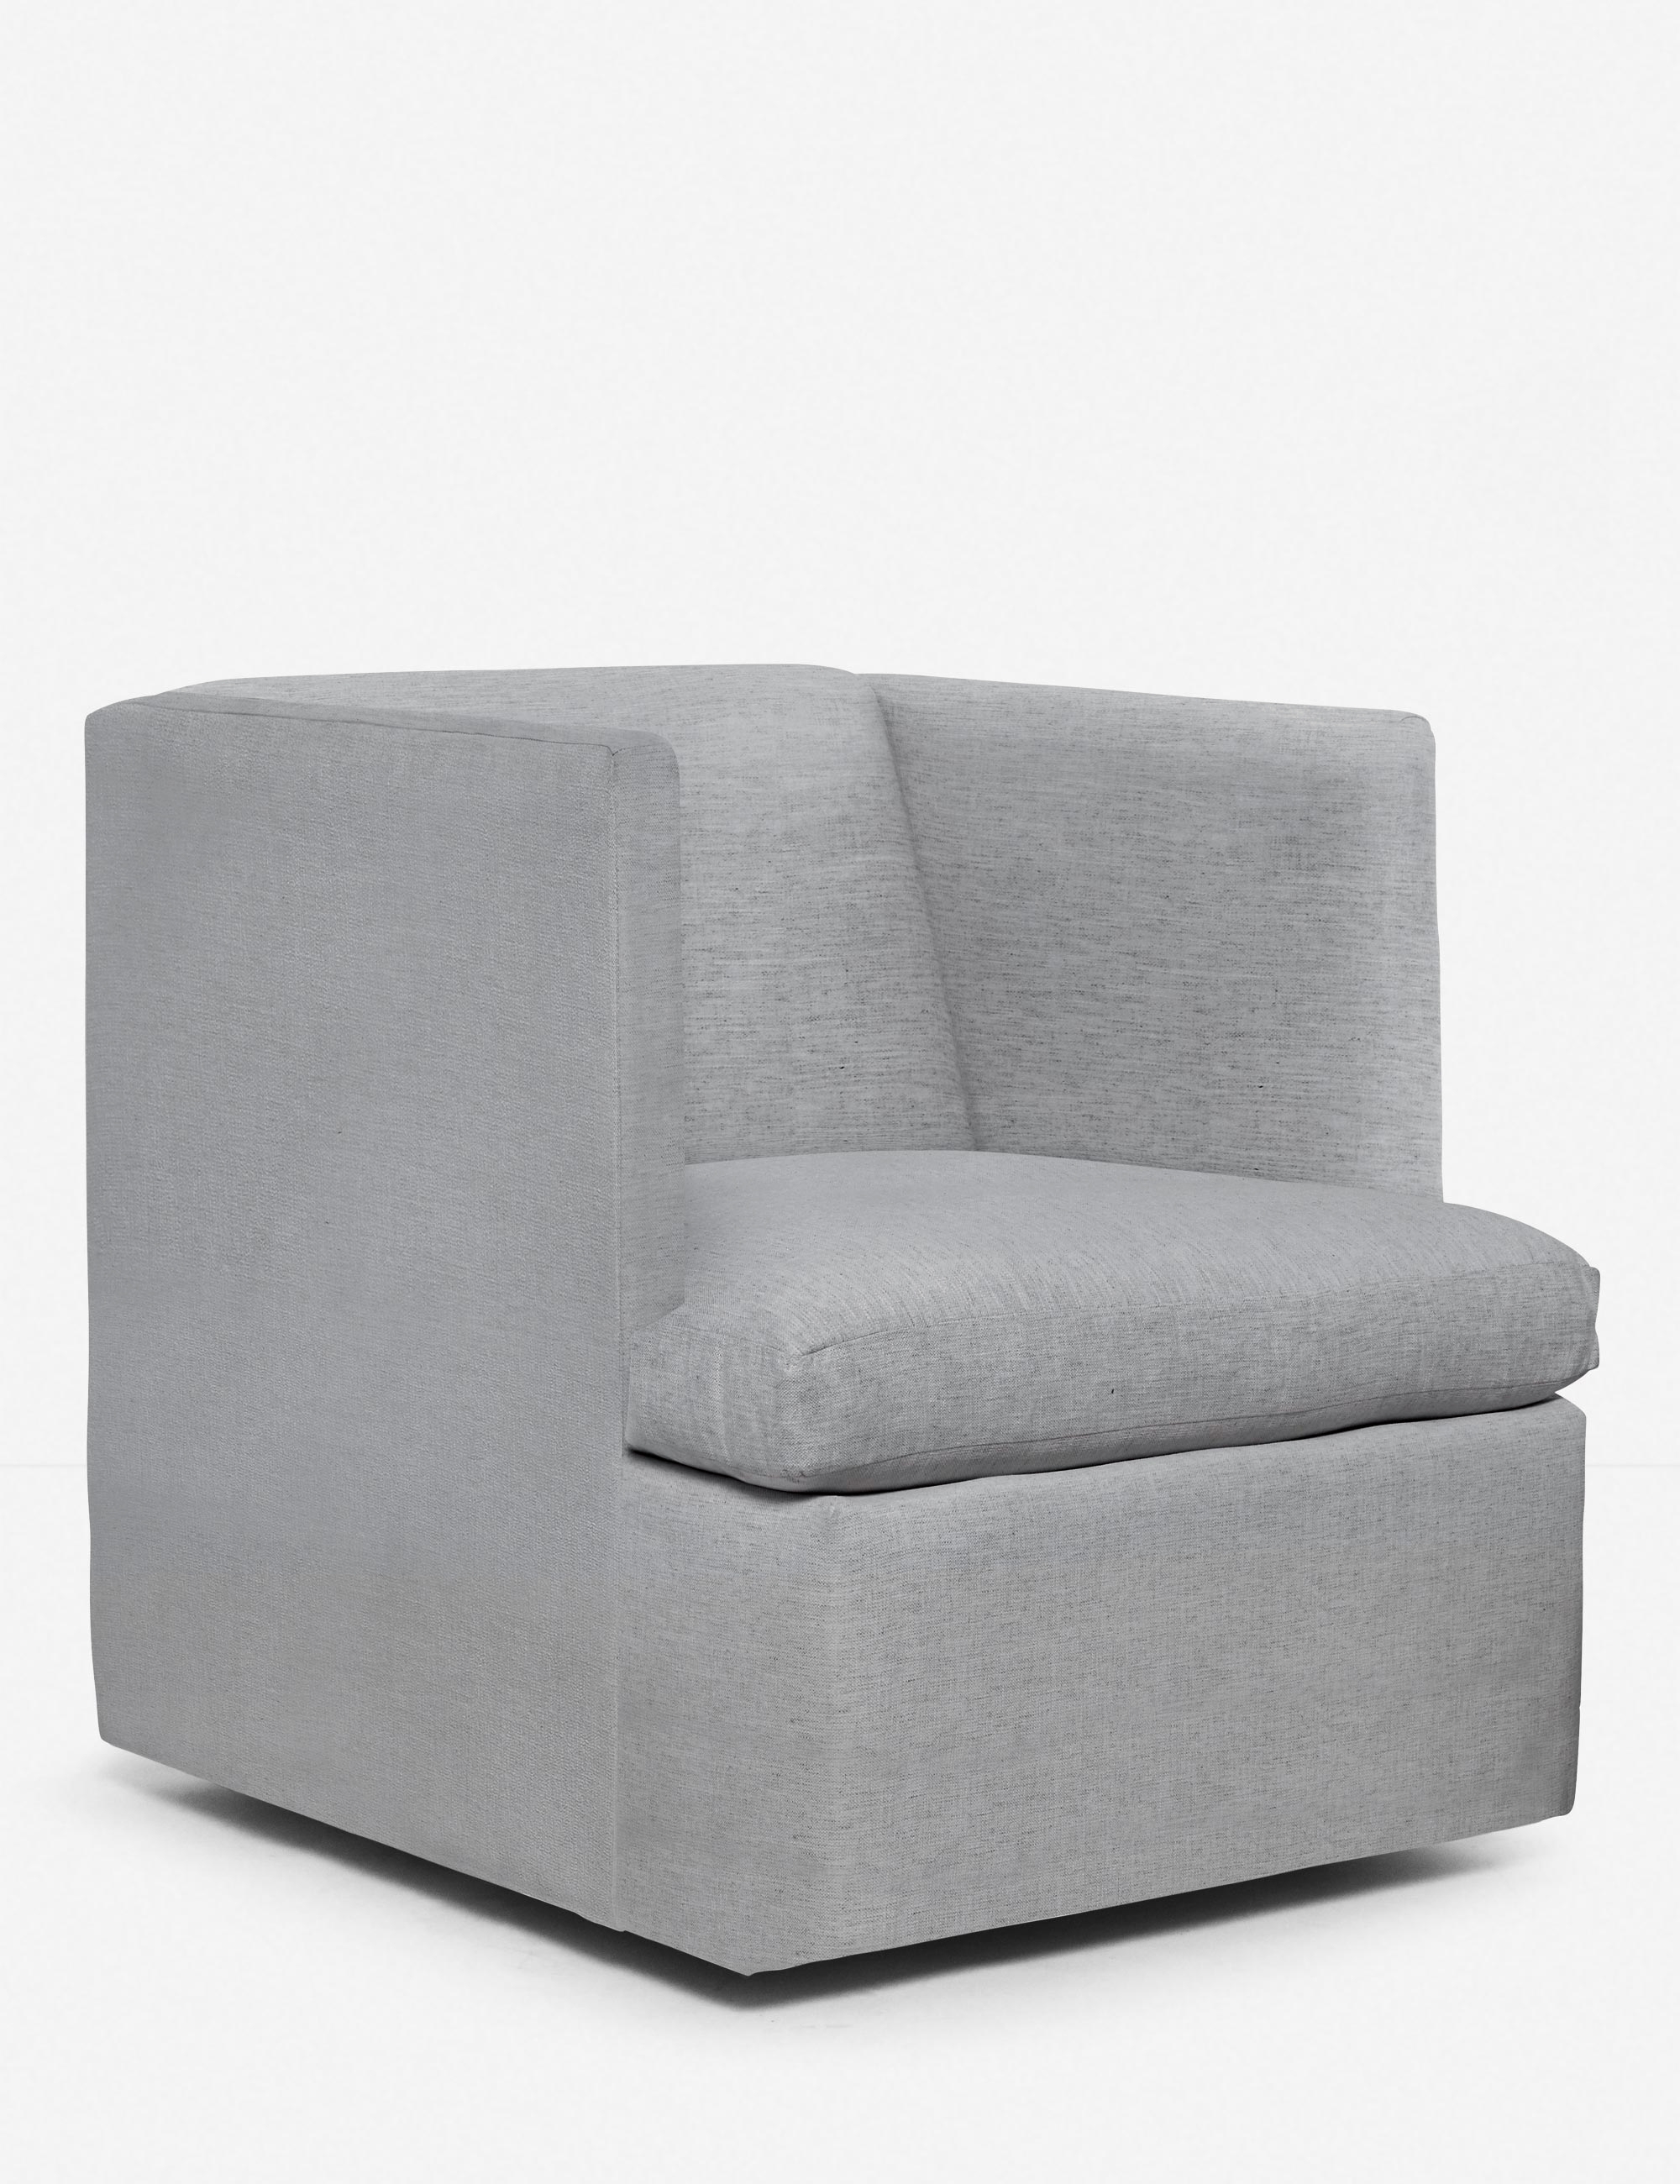 Hayden Square Swivel Chair, Light Gray - Image 1